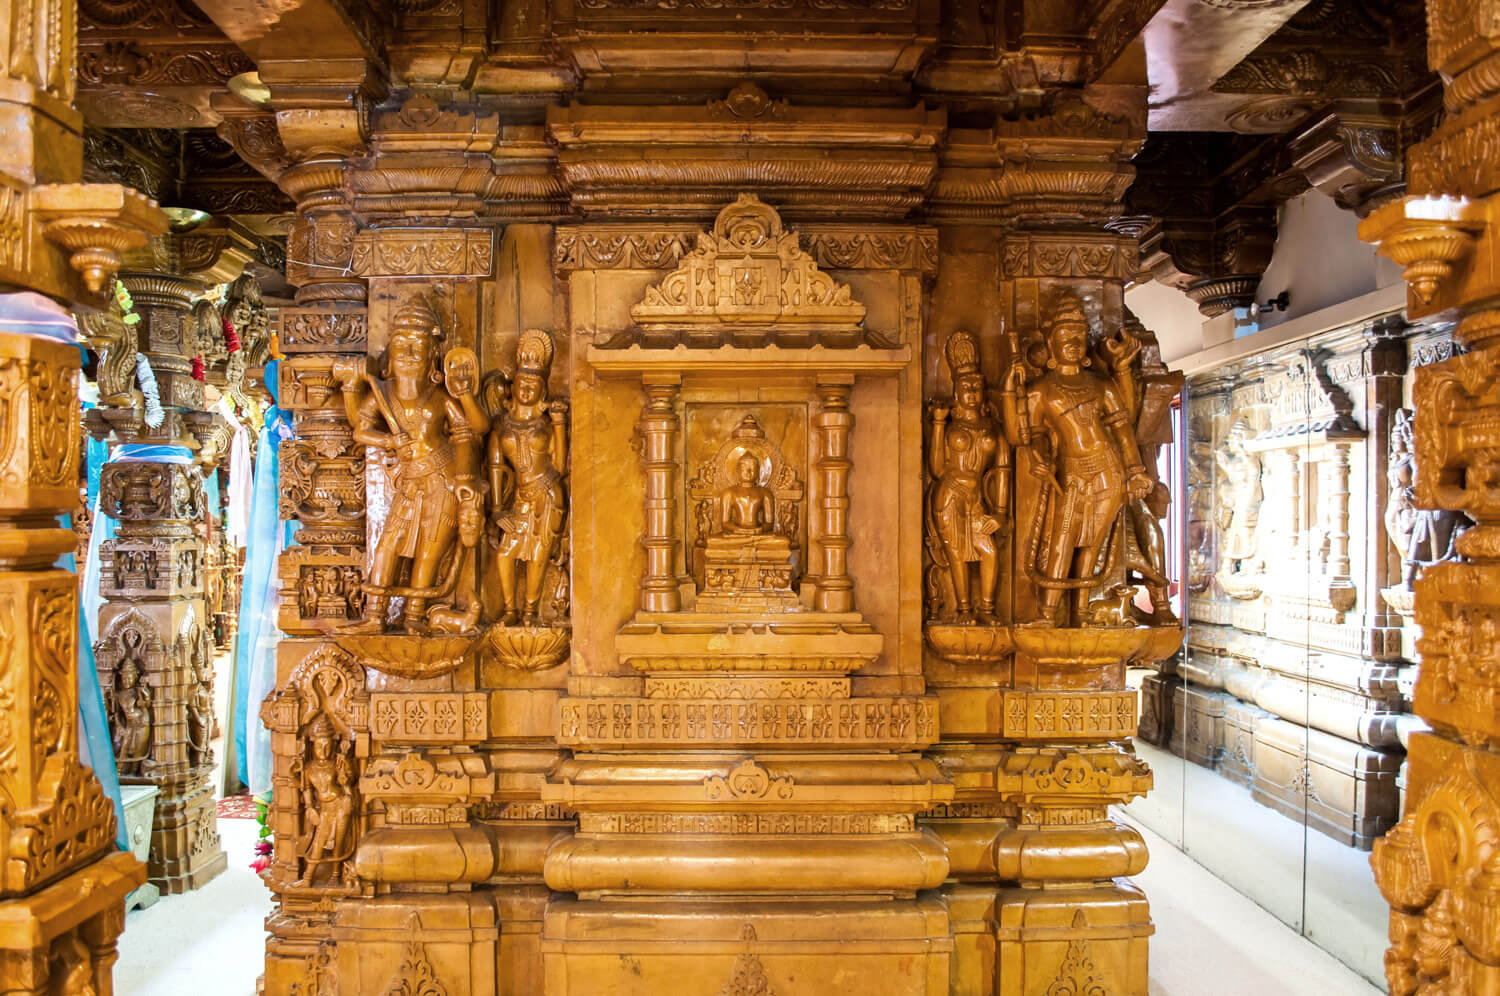 Carved stone pillar in the Garbhagriha (inner sanctum) -